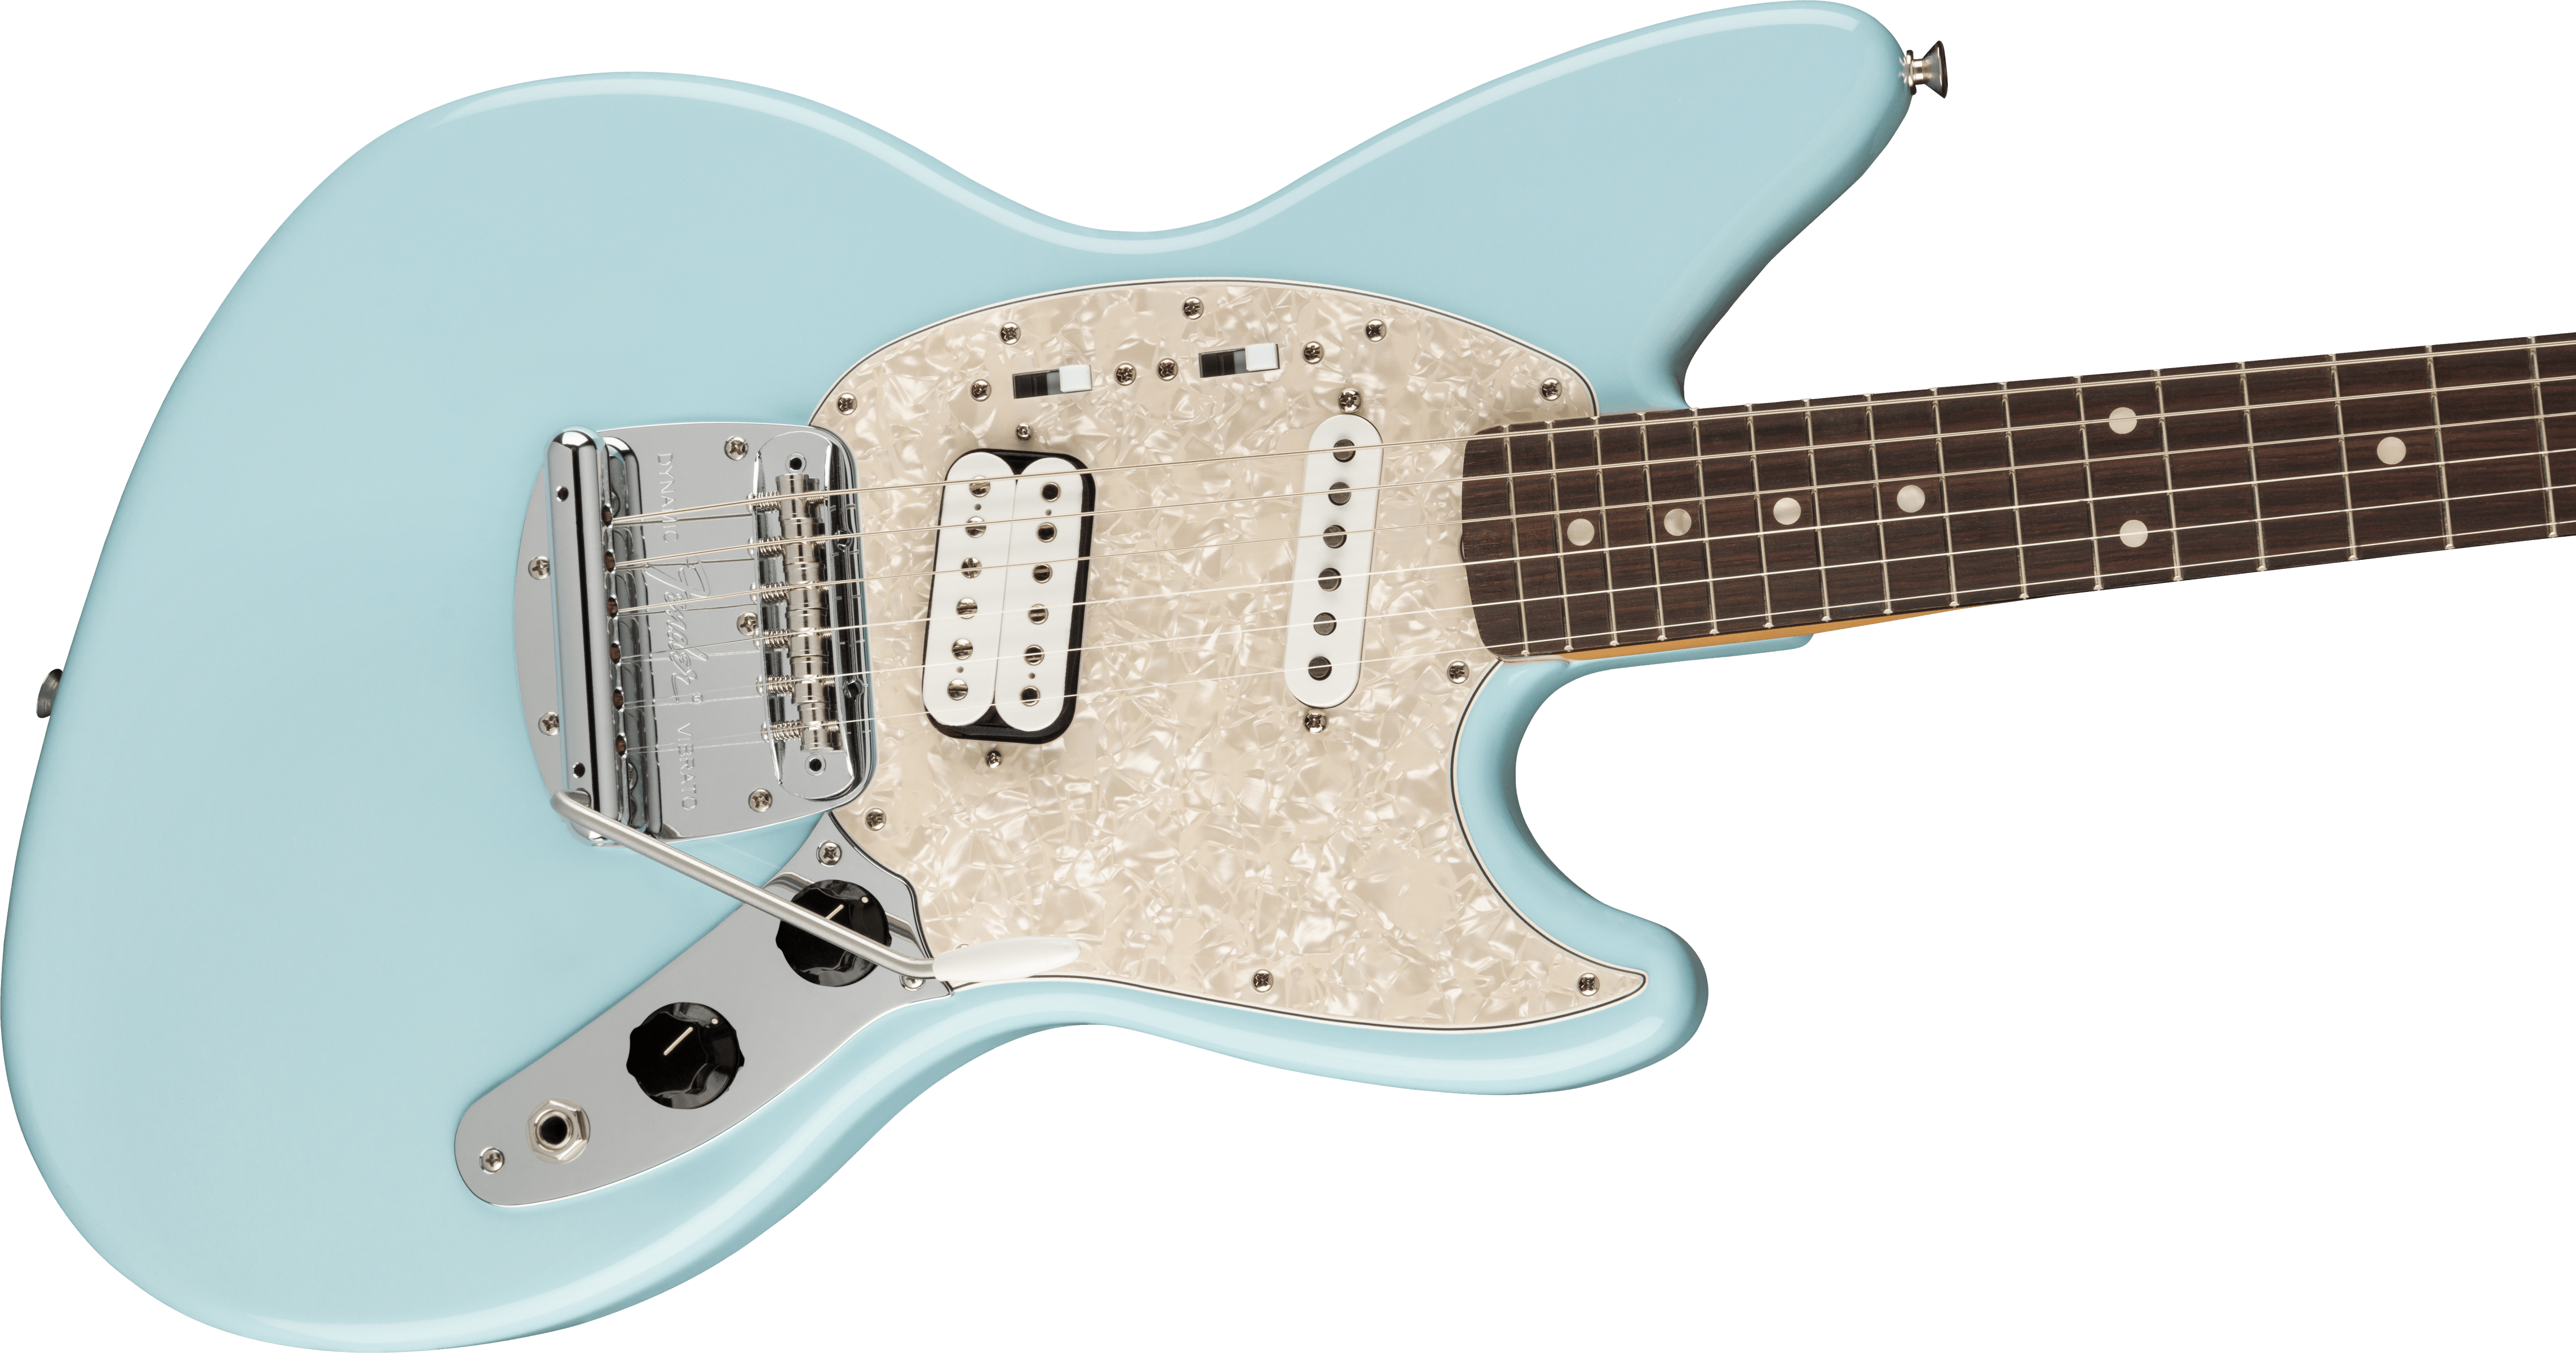 Fender Jag-stang Kurt Cobain Artist Hs Trem Rw - Sonic Blue - Guitarra electrica retro rock - Variation 3